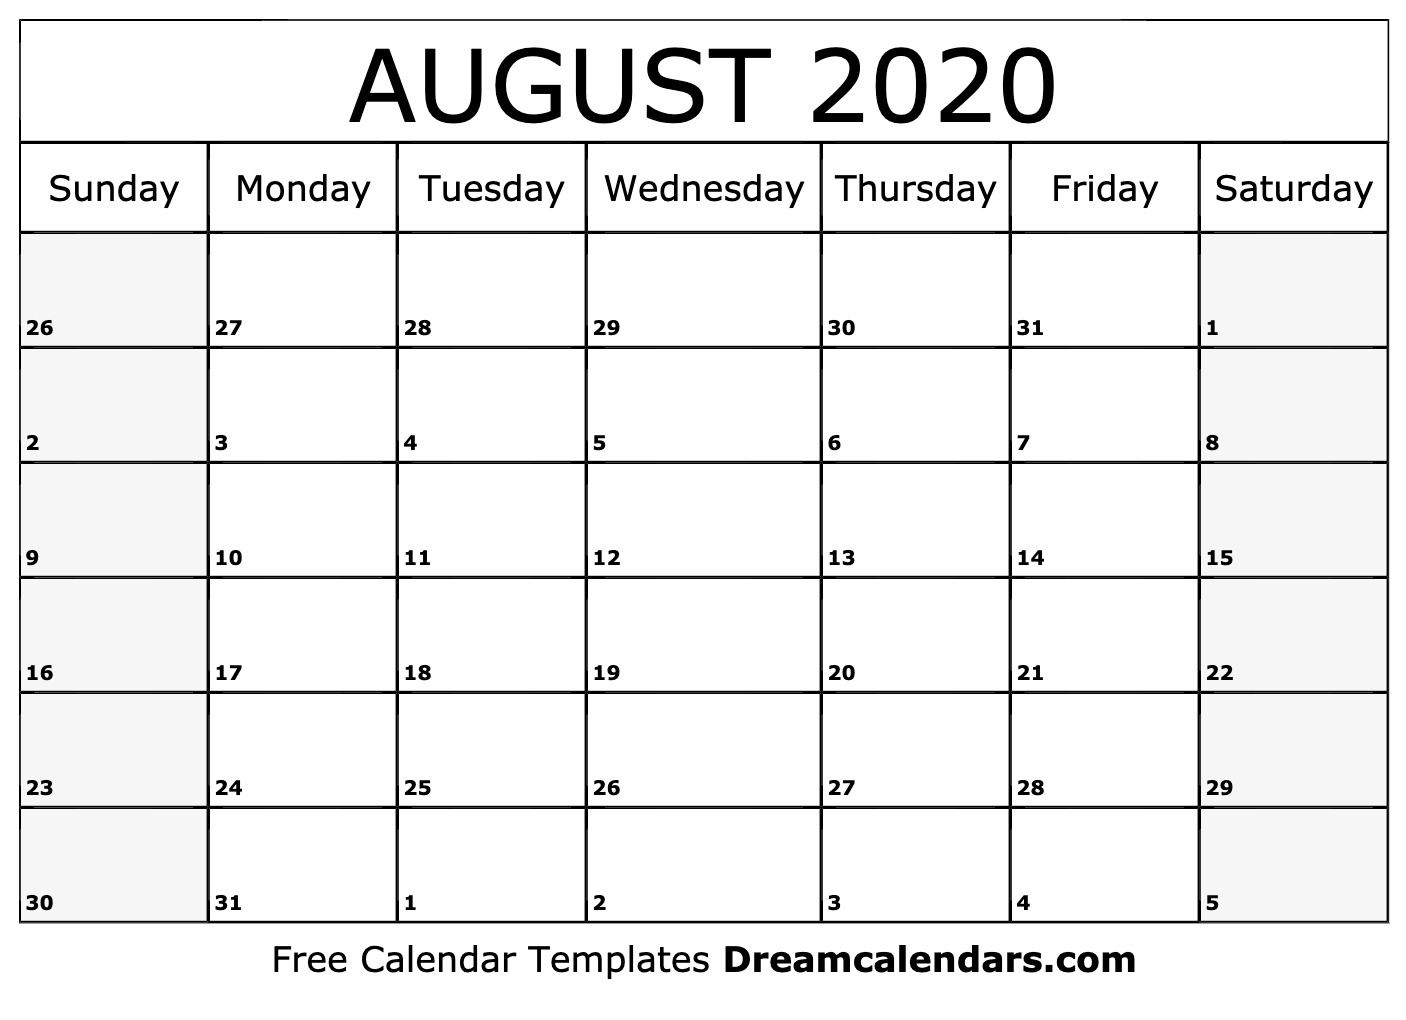 August 2020 Calendar | Free Blank Printable Templates Calendar September 2020 To August 2021